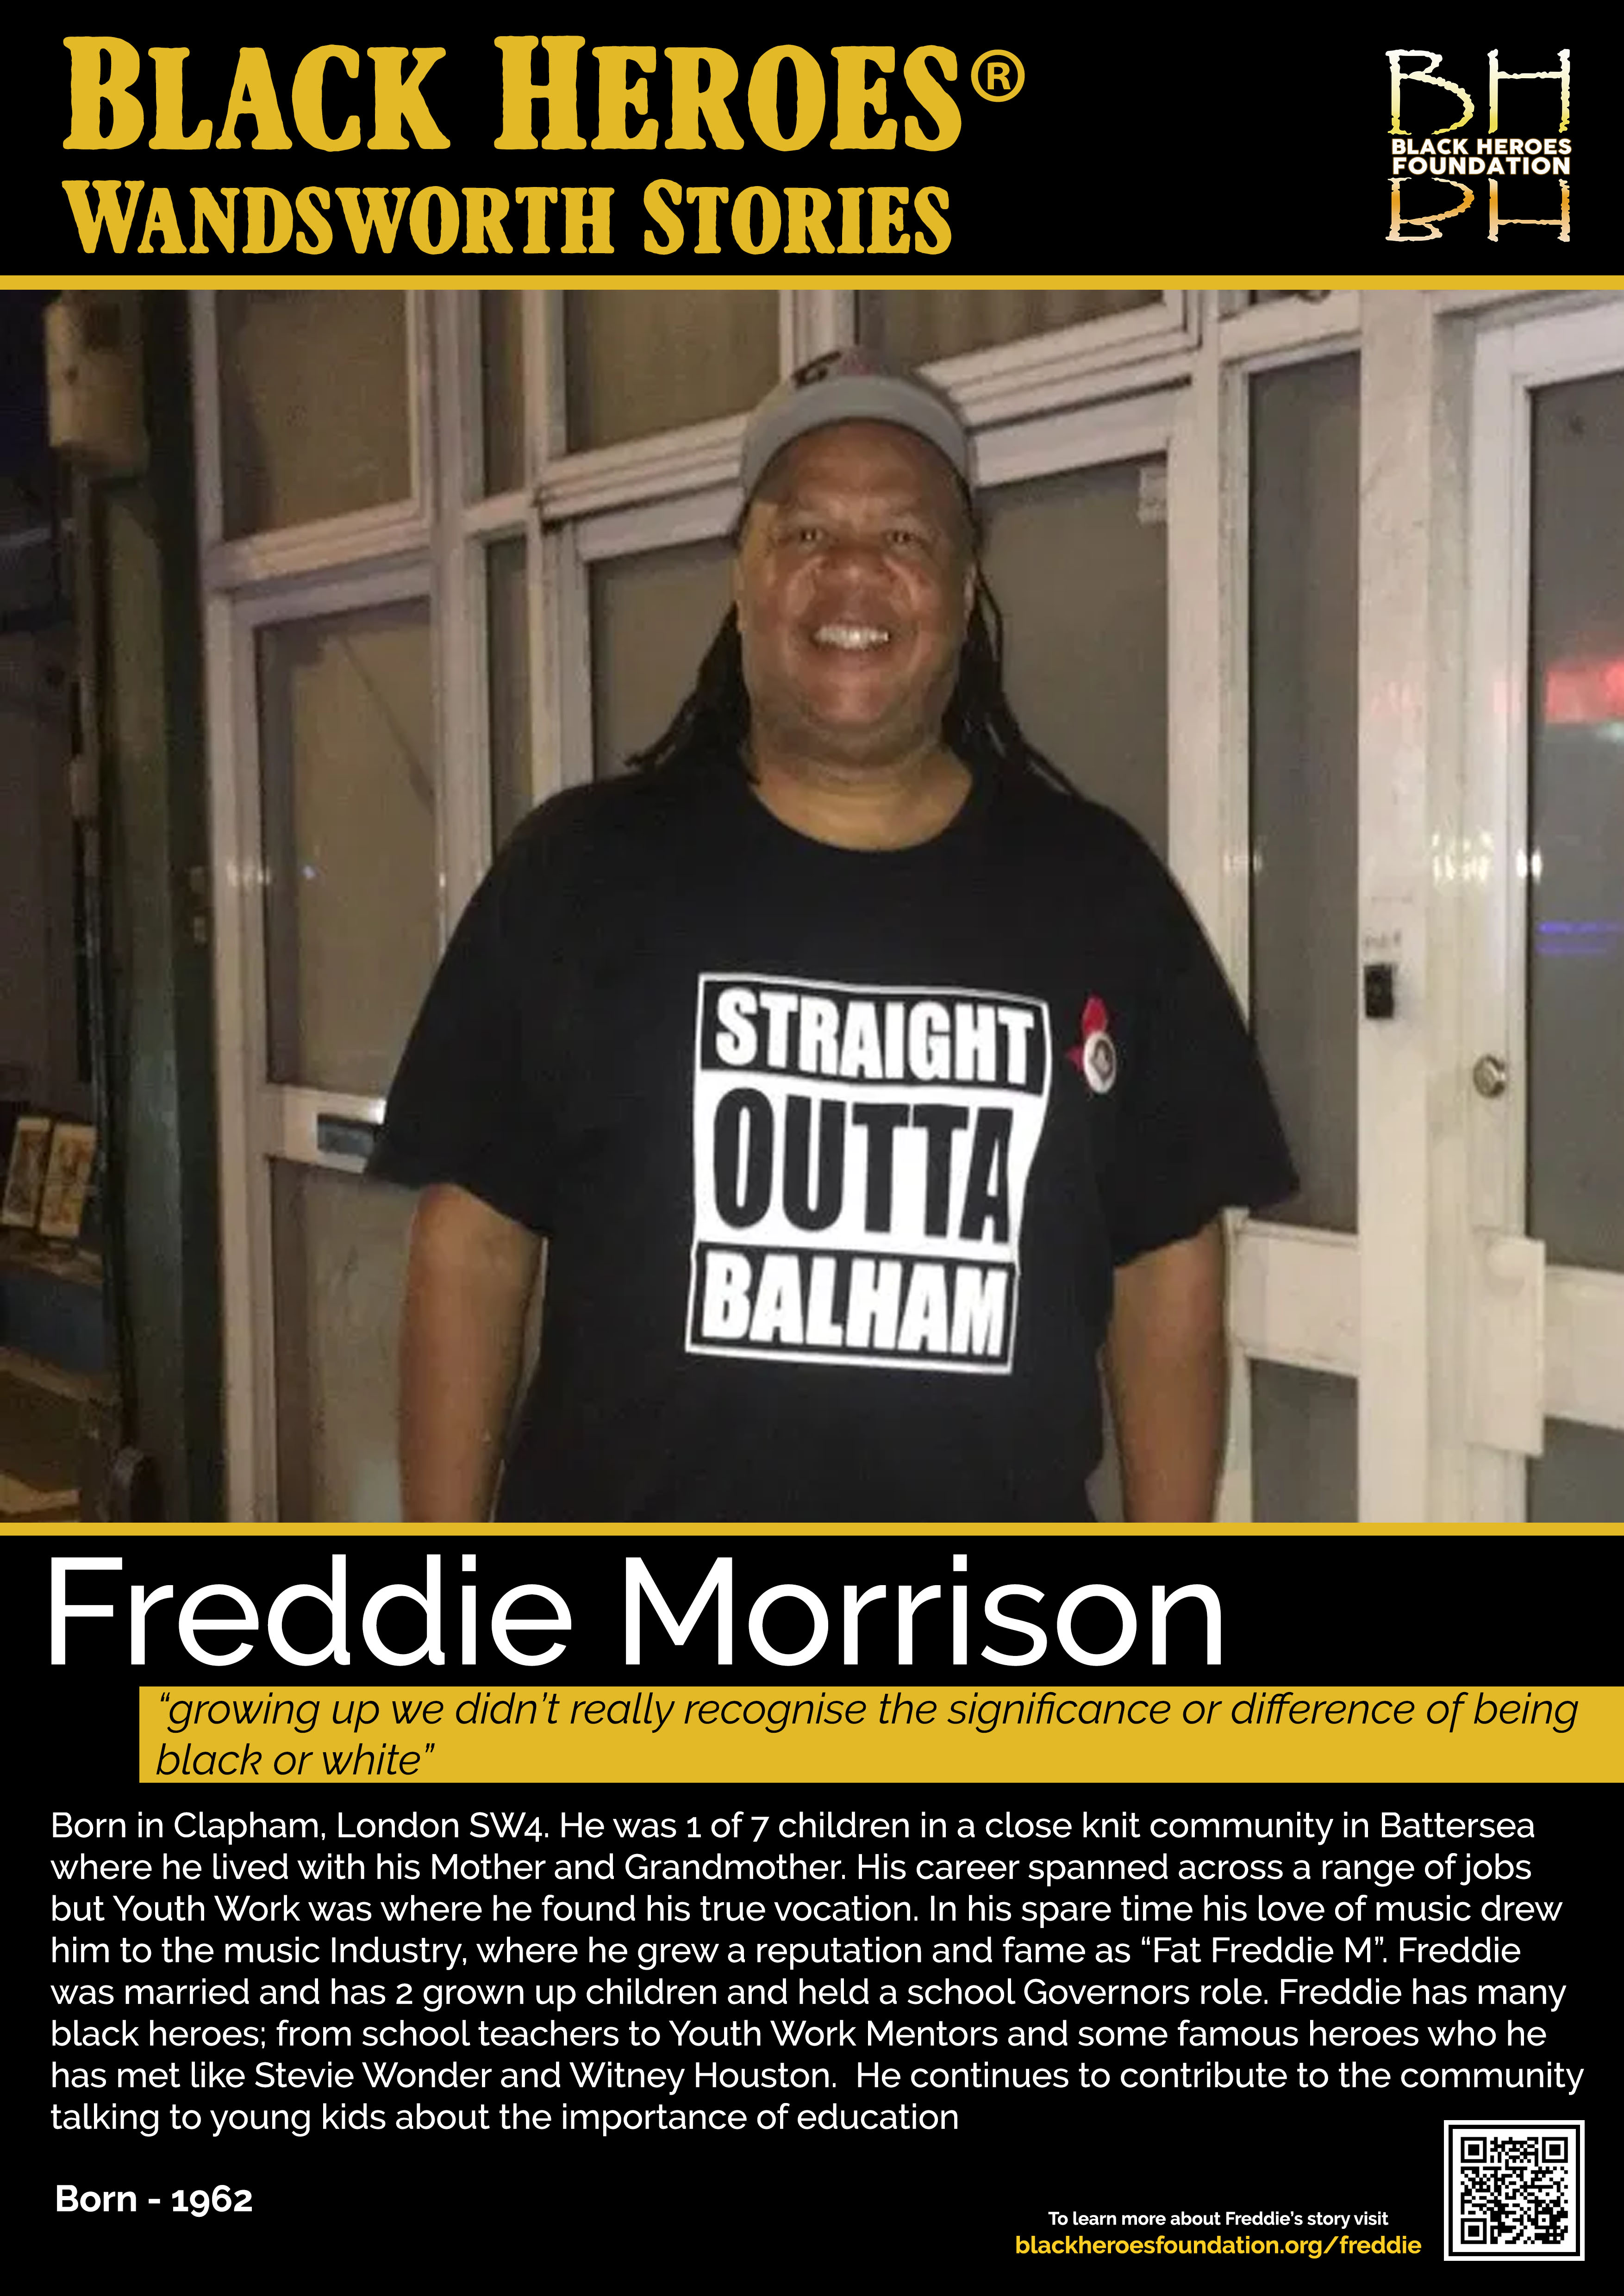 Freddie Morrison born in Clapham